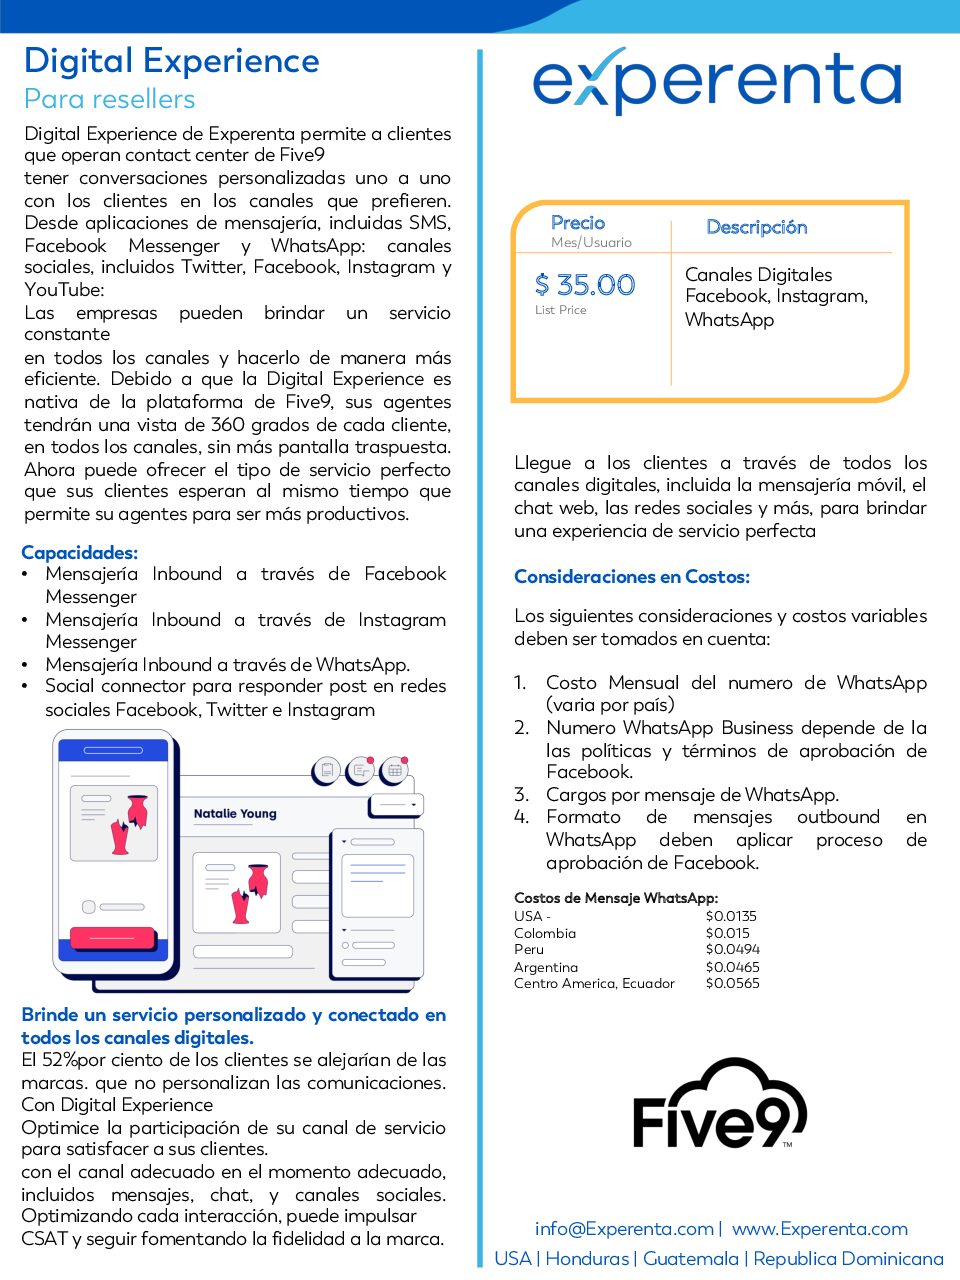 Experenta-Five9-Digital-Experience-pdf